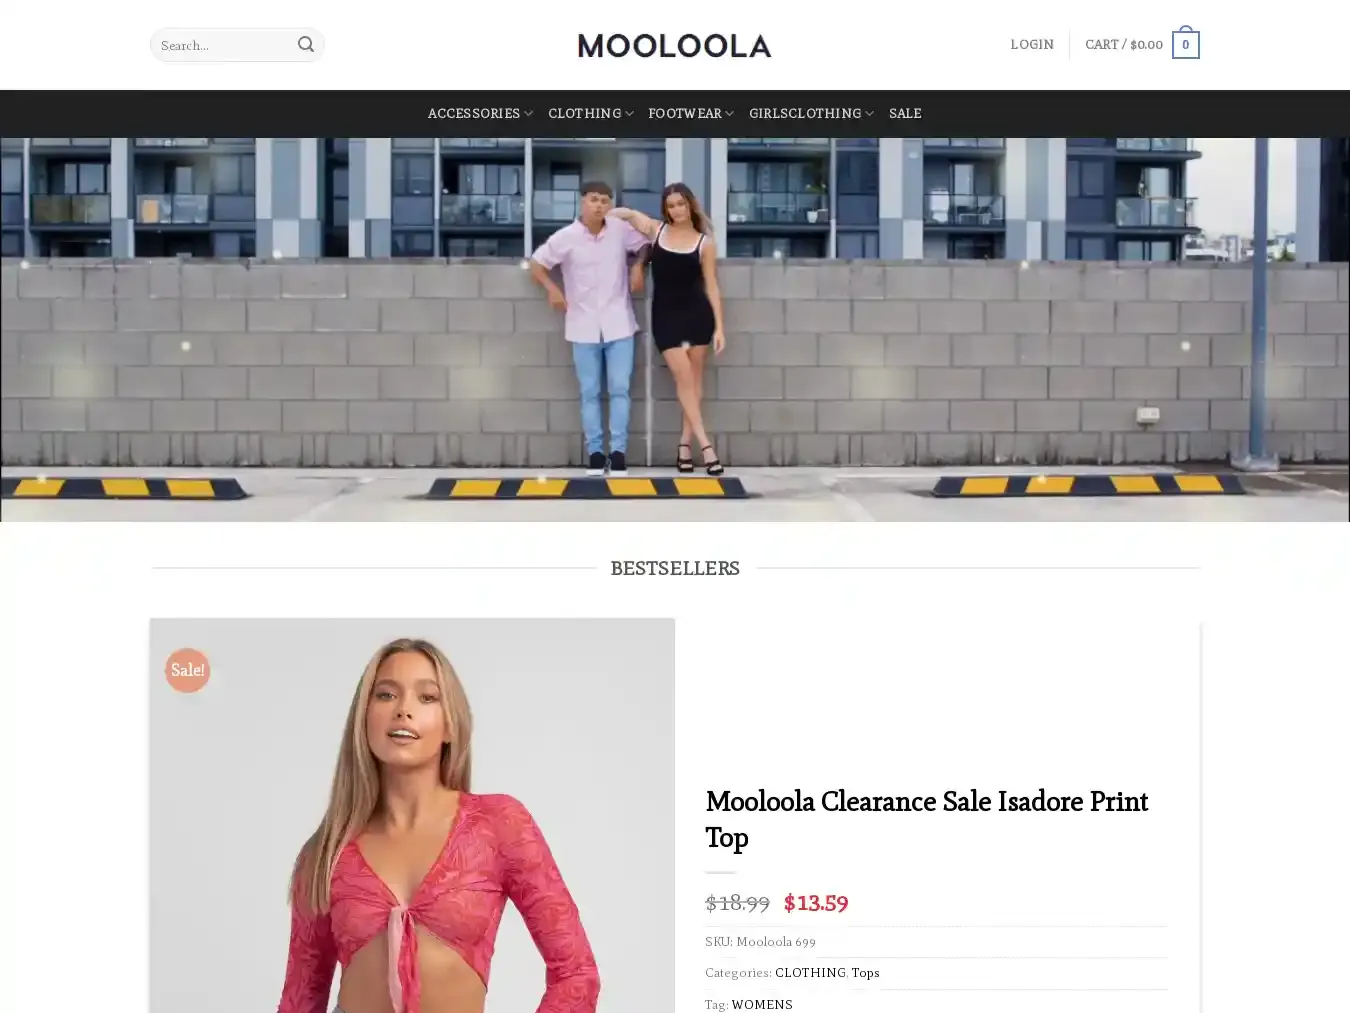 Moolooladiscount.com Fraudulent Fashion website.